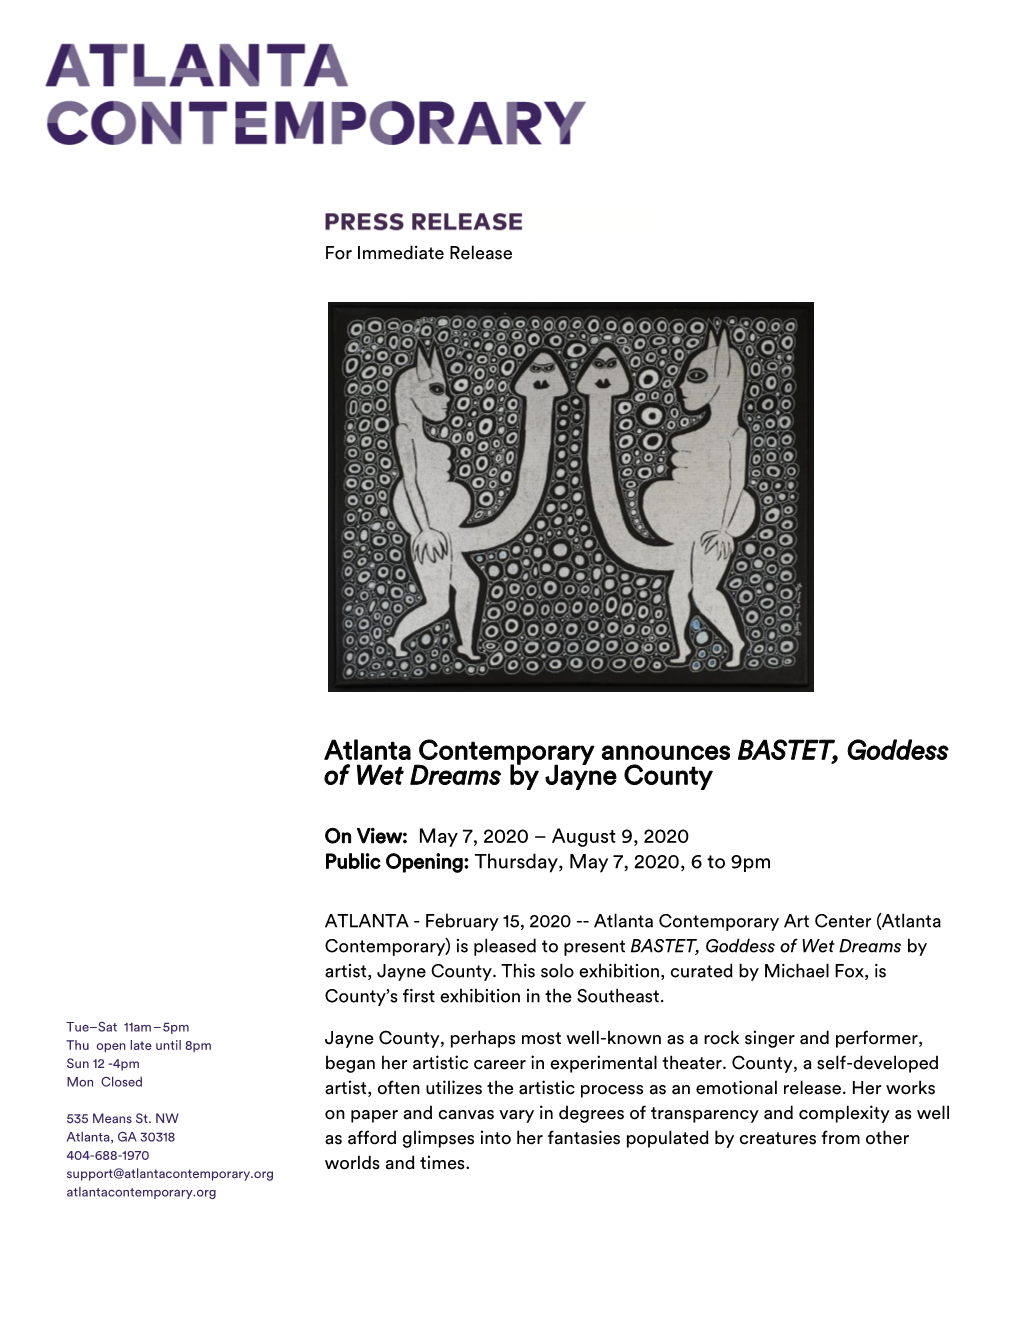 Atlanta Contemporary Announces BASTET, Goddess of Wet Dreams by Jayne County